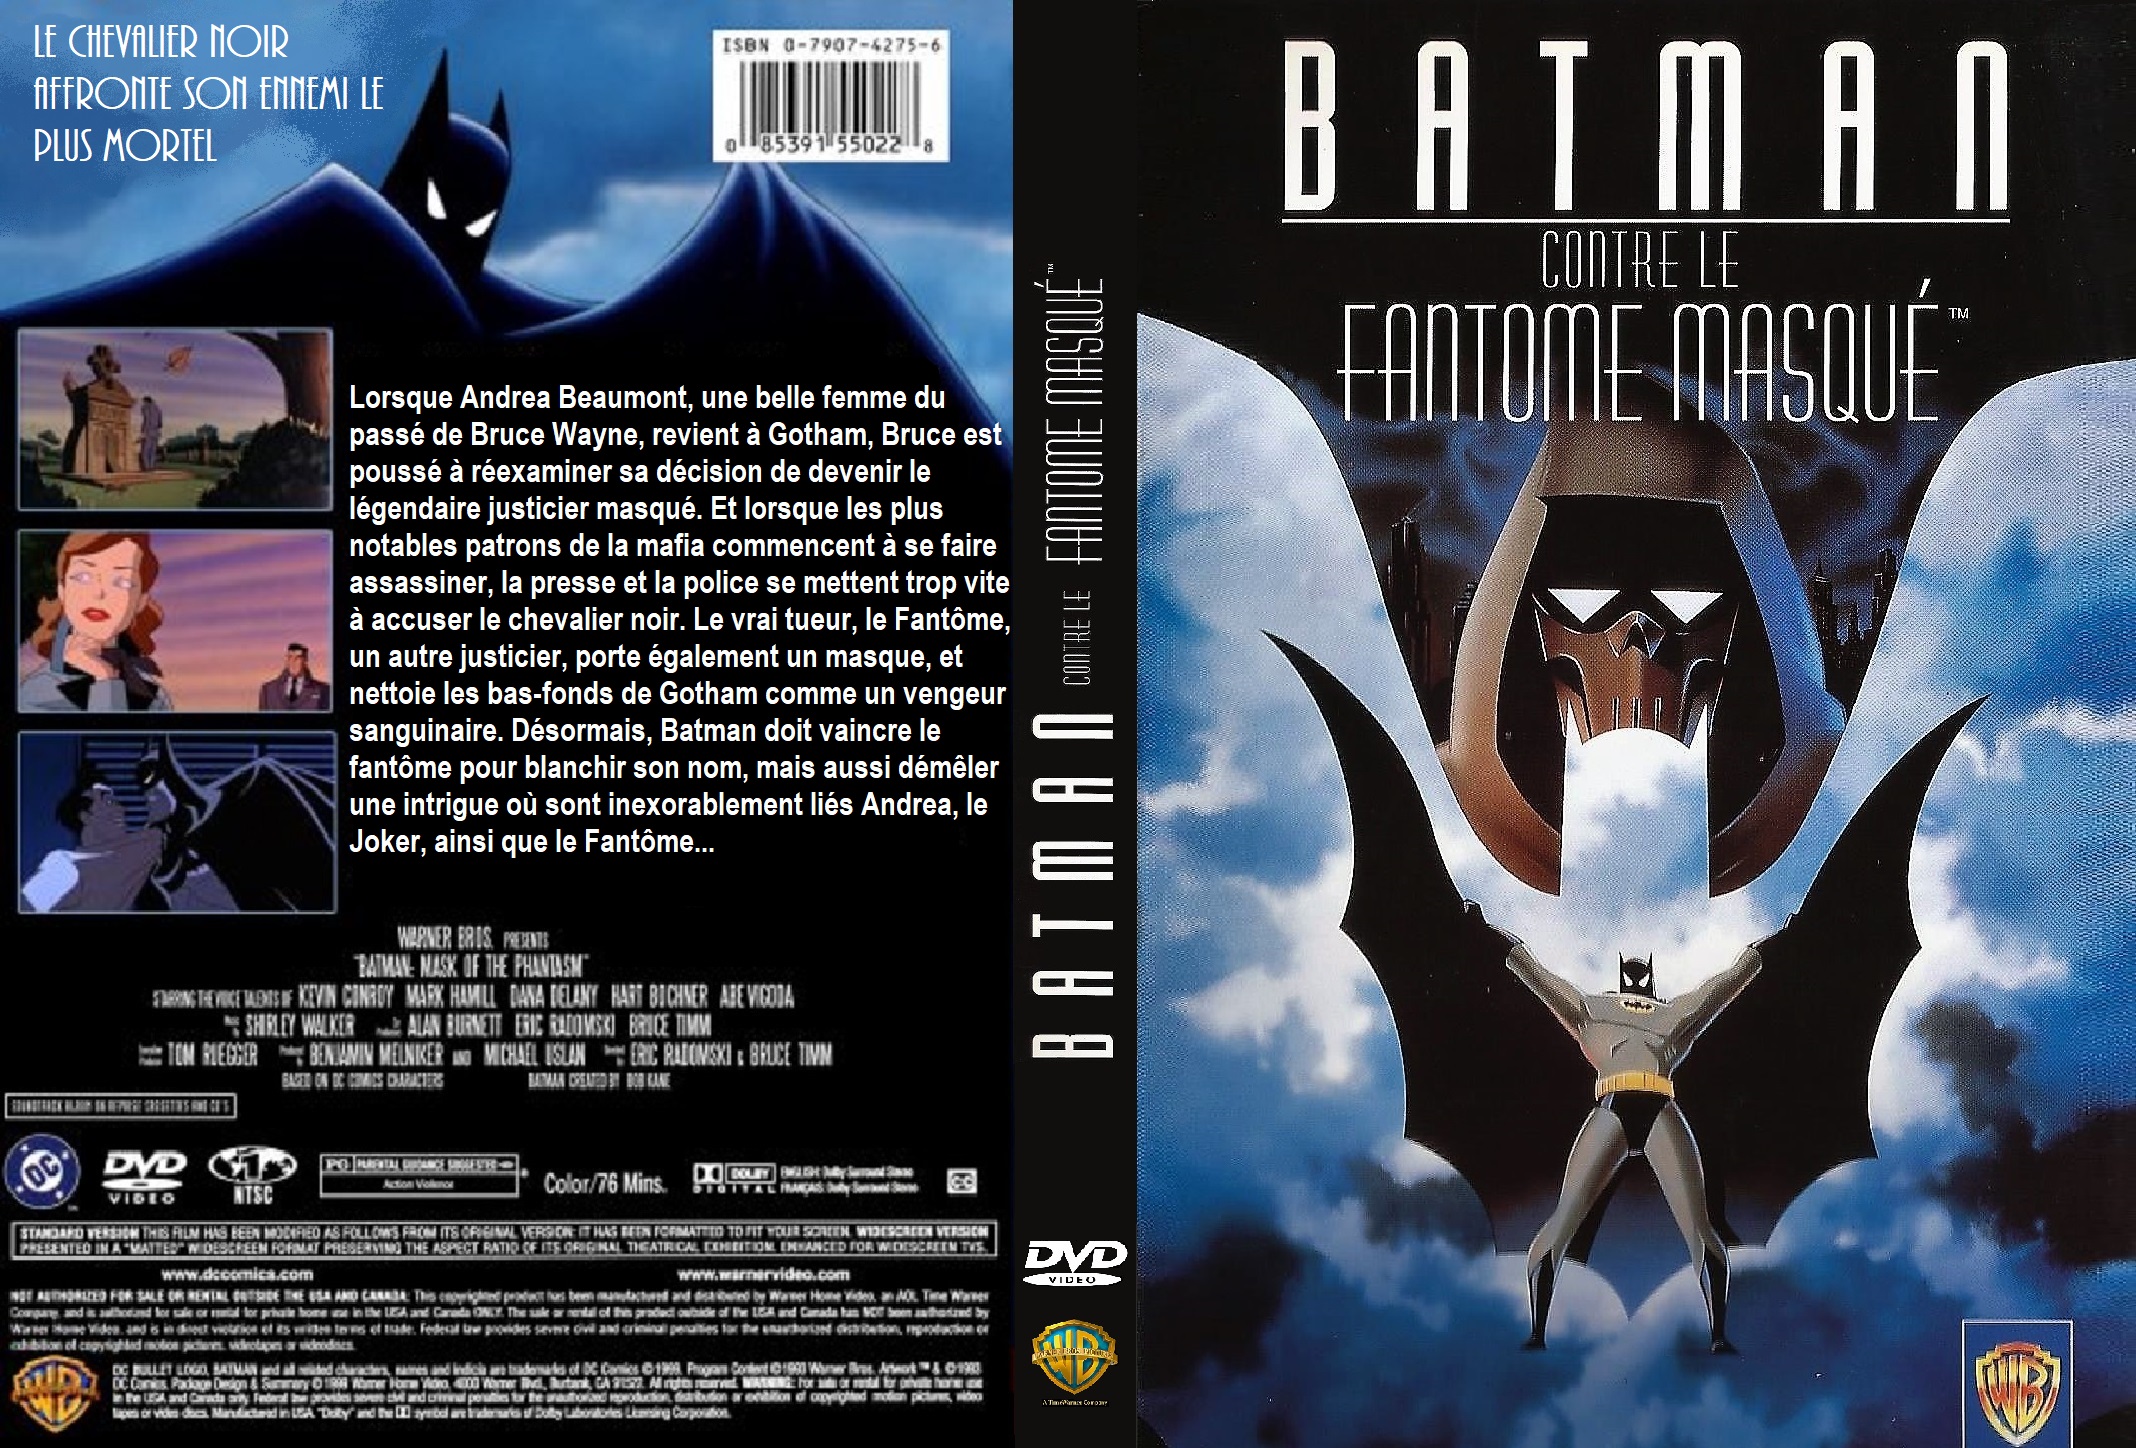 Jaquette DVD Batman contre le fantome masque custom v2